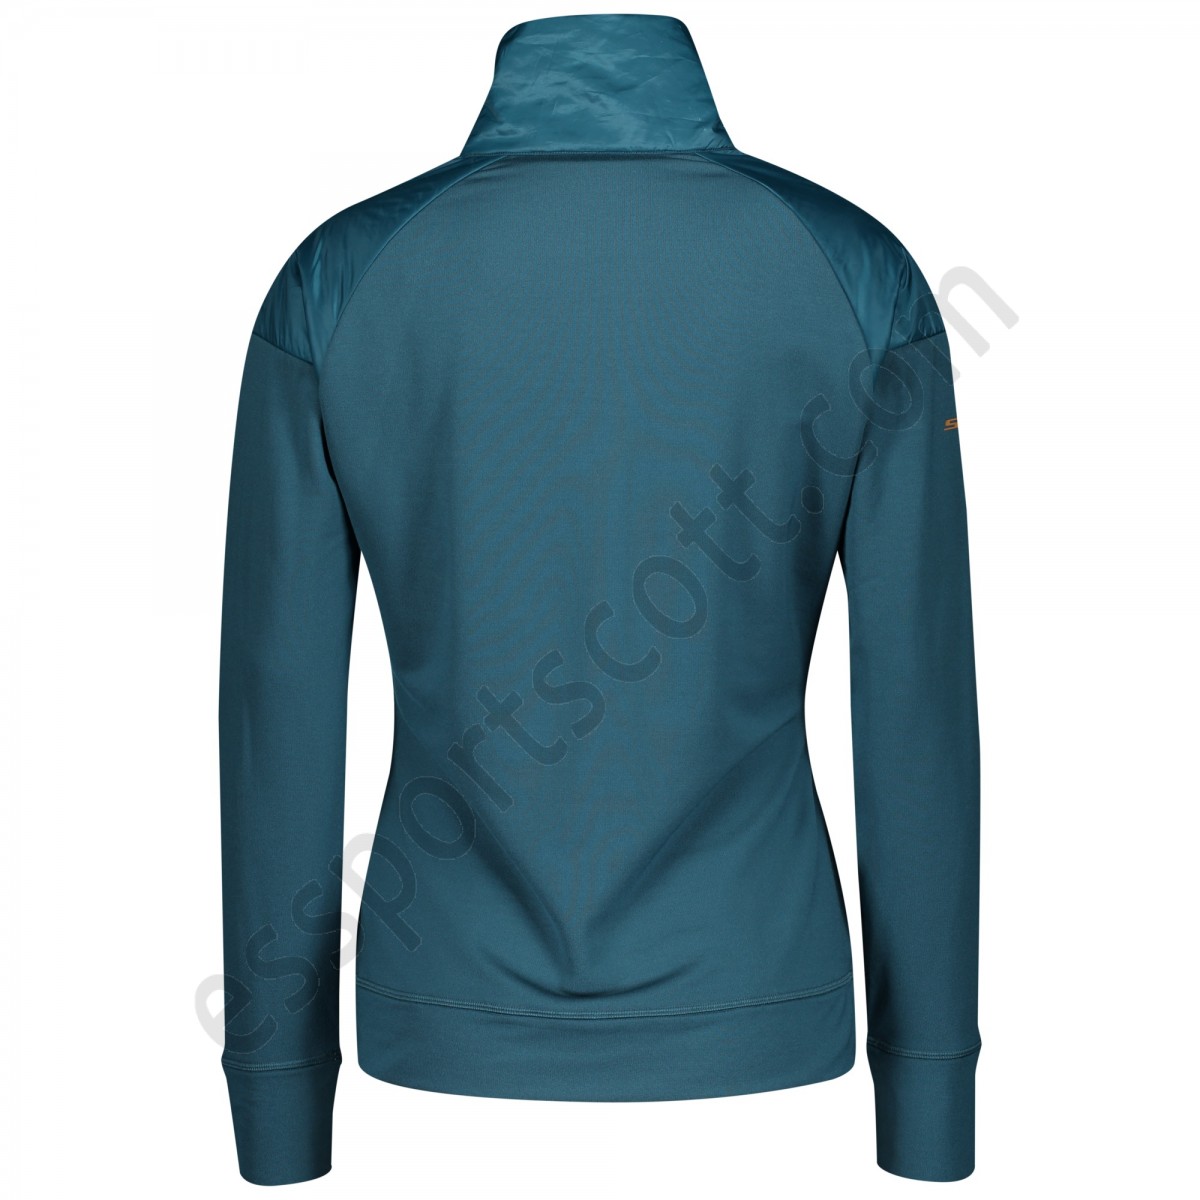 Scott Tienda ◇ Insuloft Merino Women's Jacket - -1